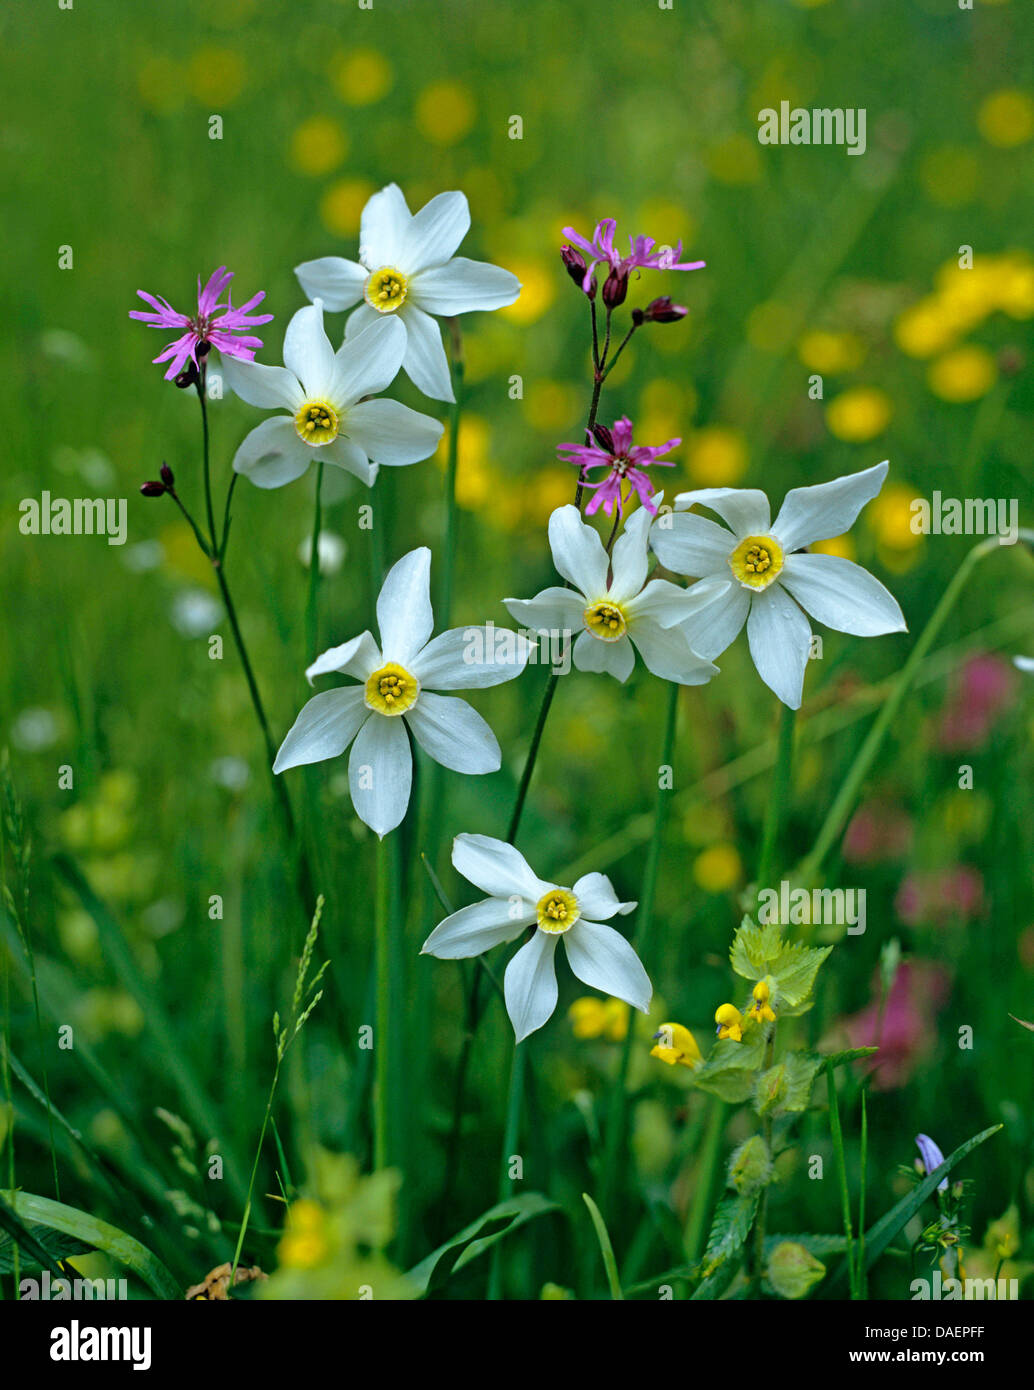 pheasant's-eye daffodil, pheasant's-eye narcissus, poet's narcissus (Narcissus radiiflorus, Narcissus poeticus ssp. radiiflorus), blooming in a meadow with buttercup, Austria Stock Photo